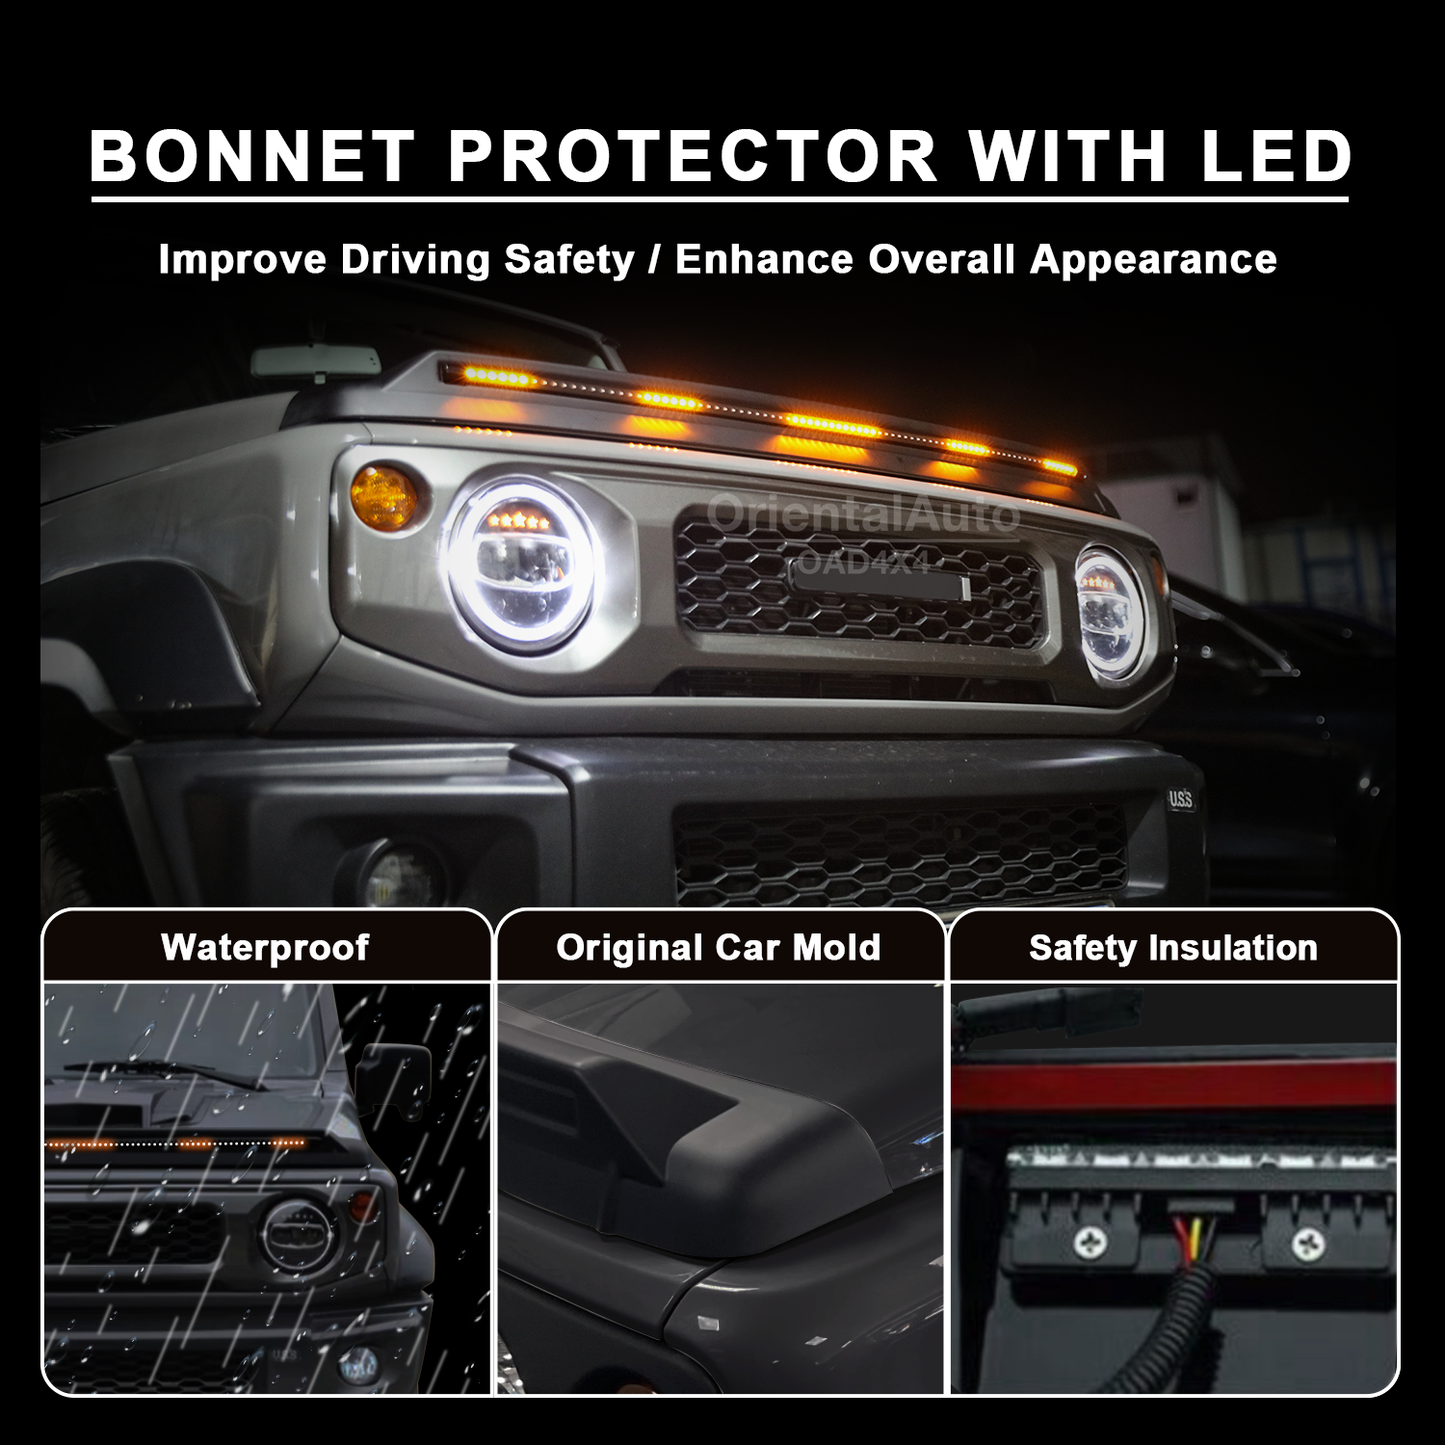 LED Light Bonnet Protector Hood Guard for Suzuki Jimny 2018-Onwards